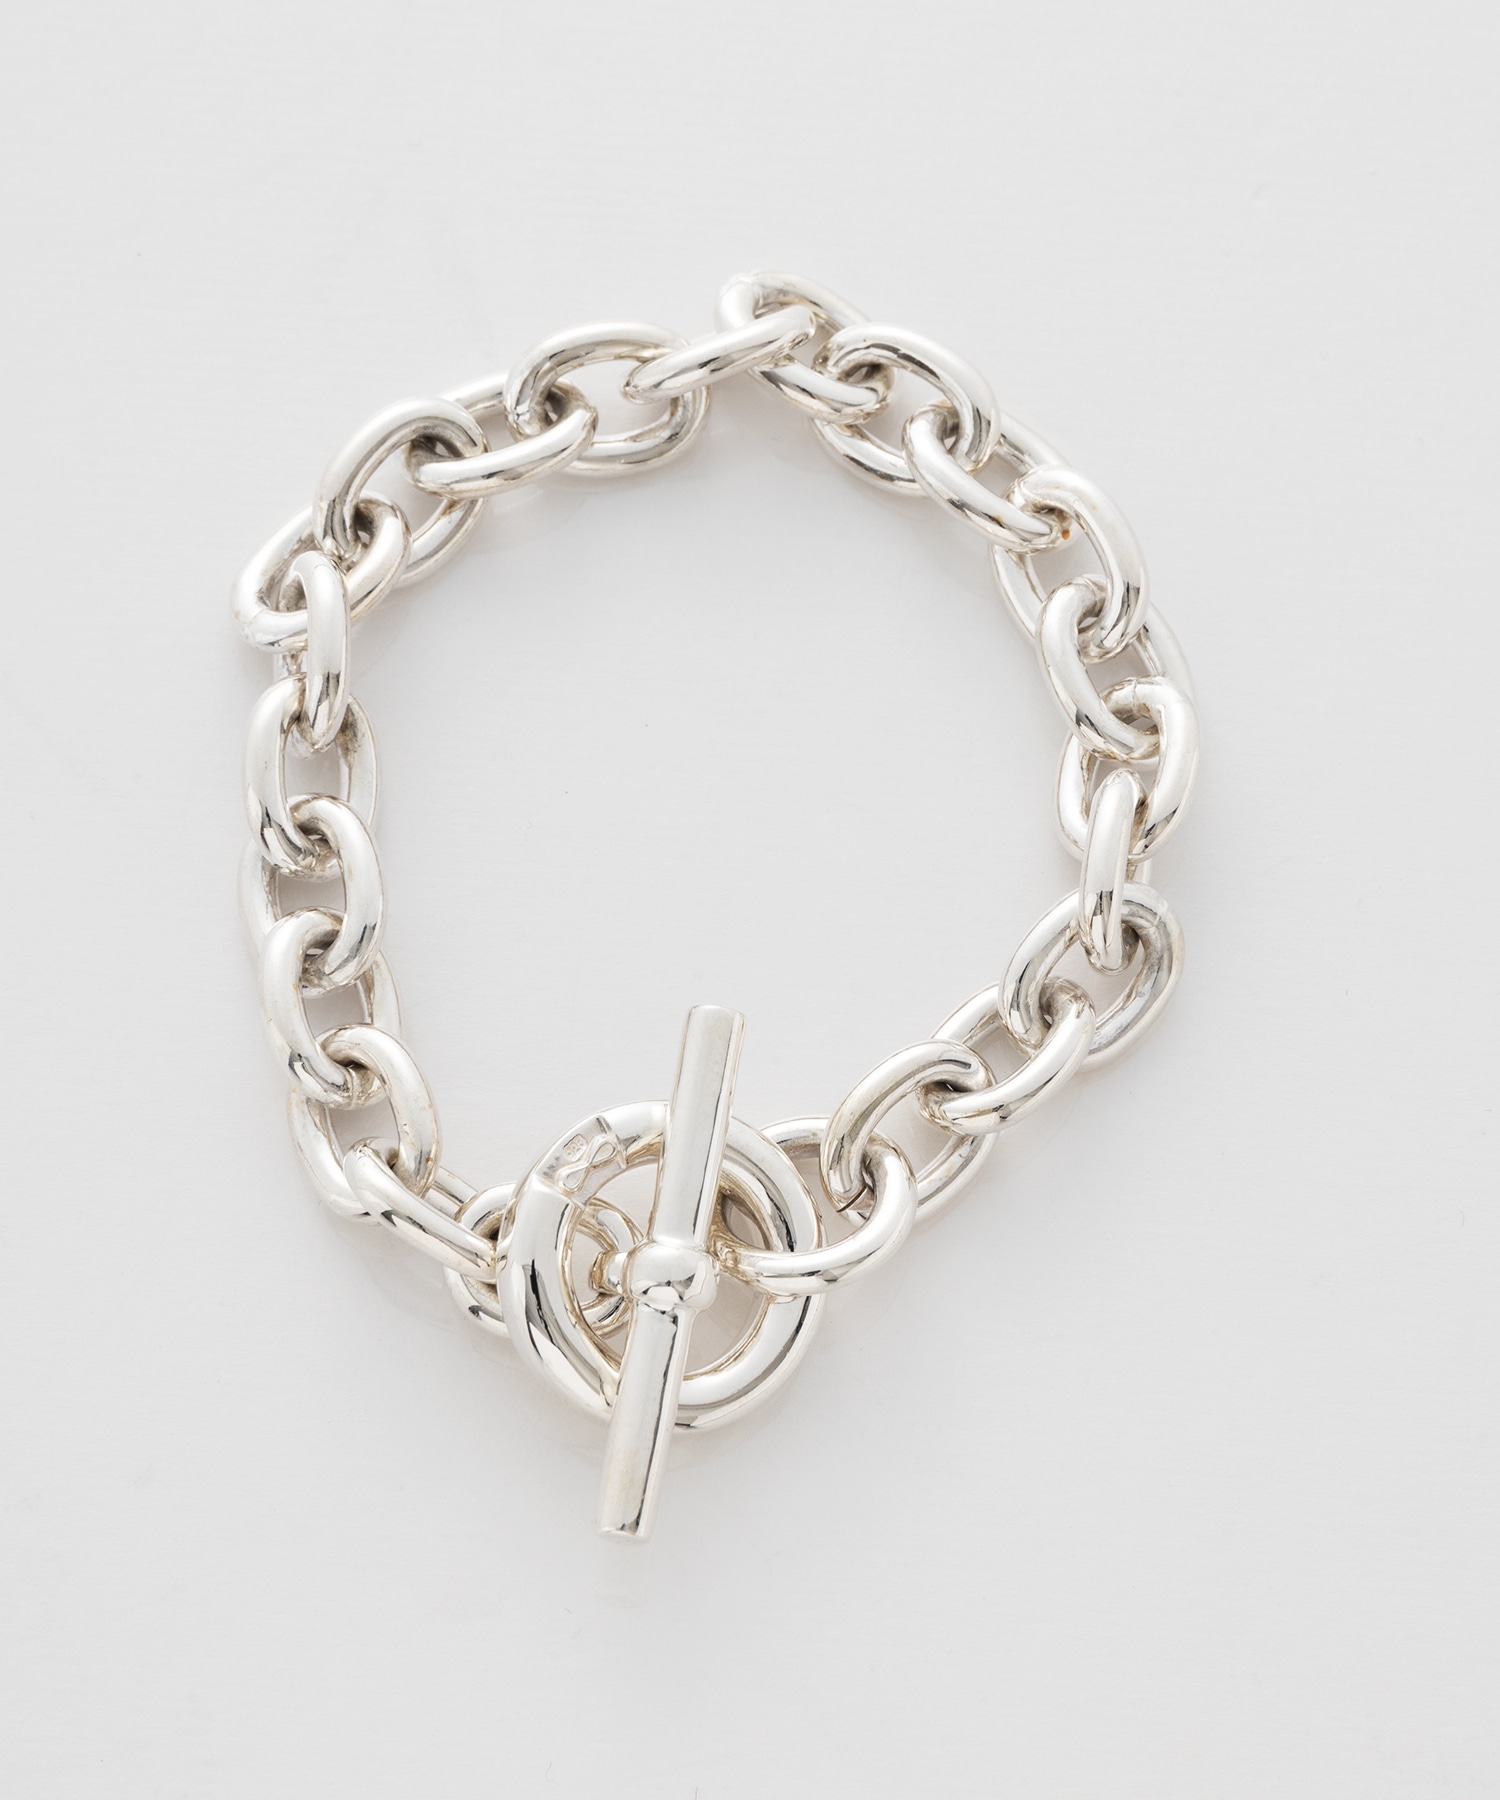 Hook connect bracelet L